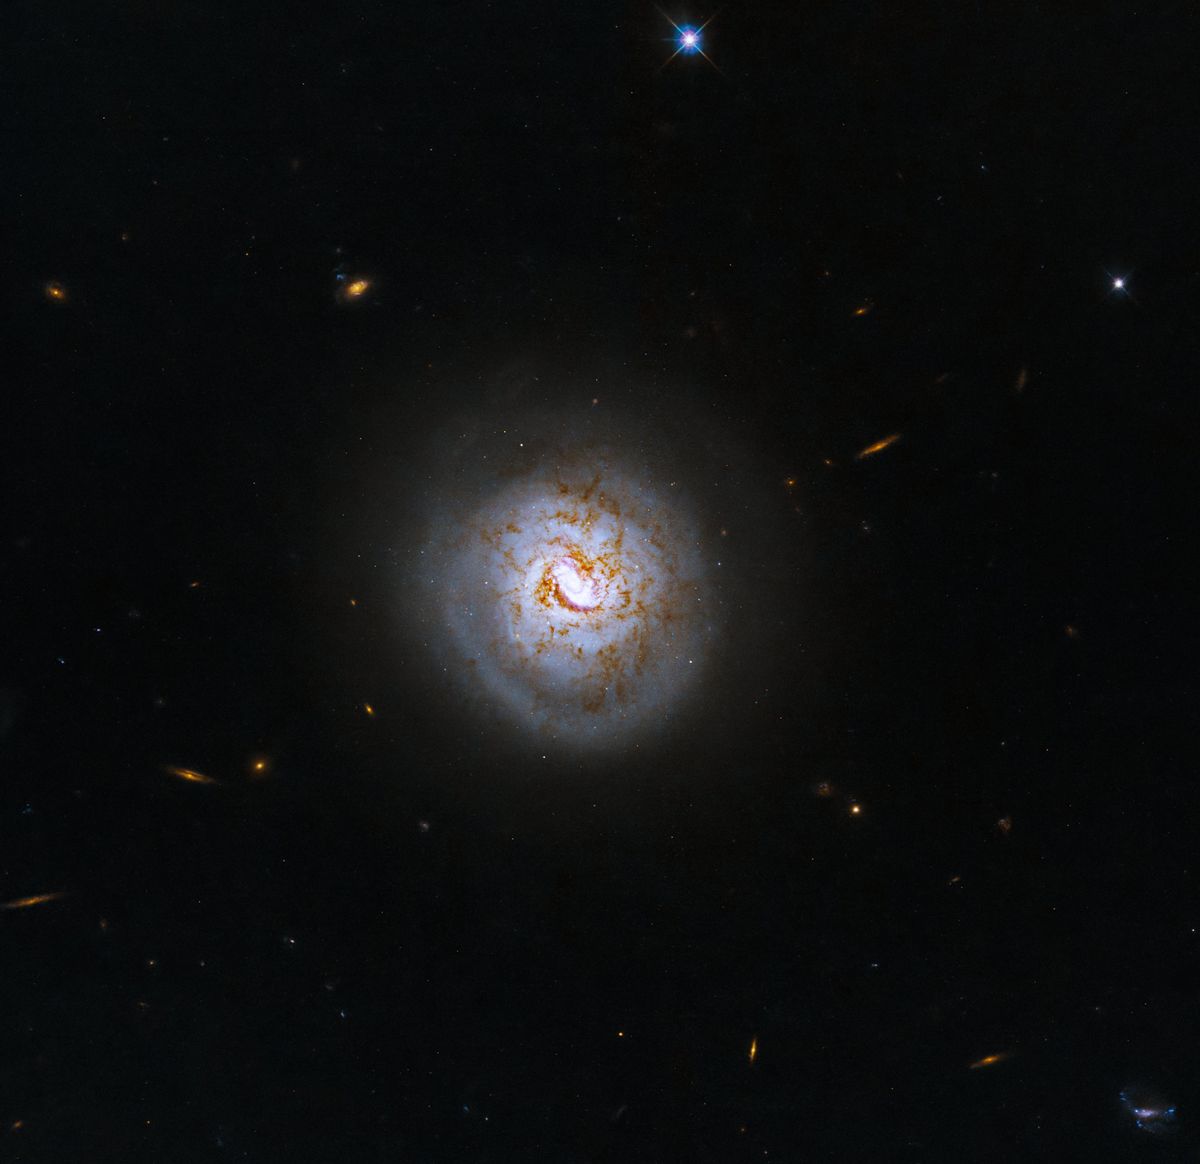 'Baseball galaxy' with a black hole heart NLFPr9N4zJPpannioNLUr7-1200-80